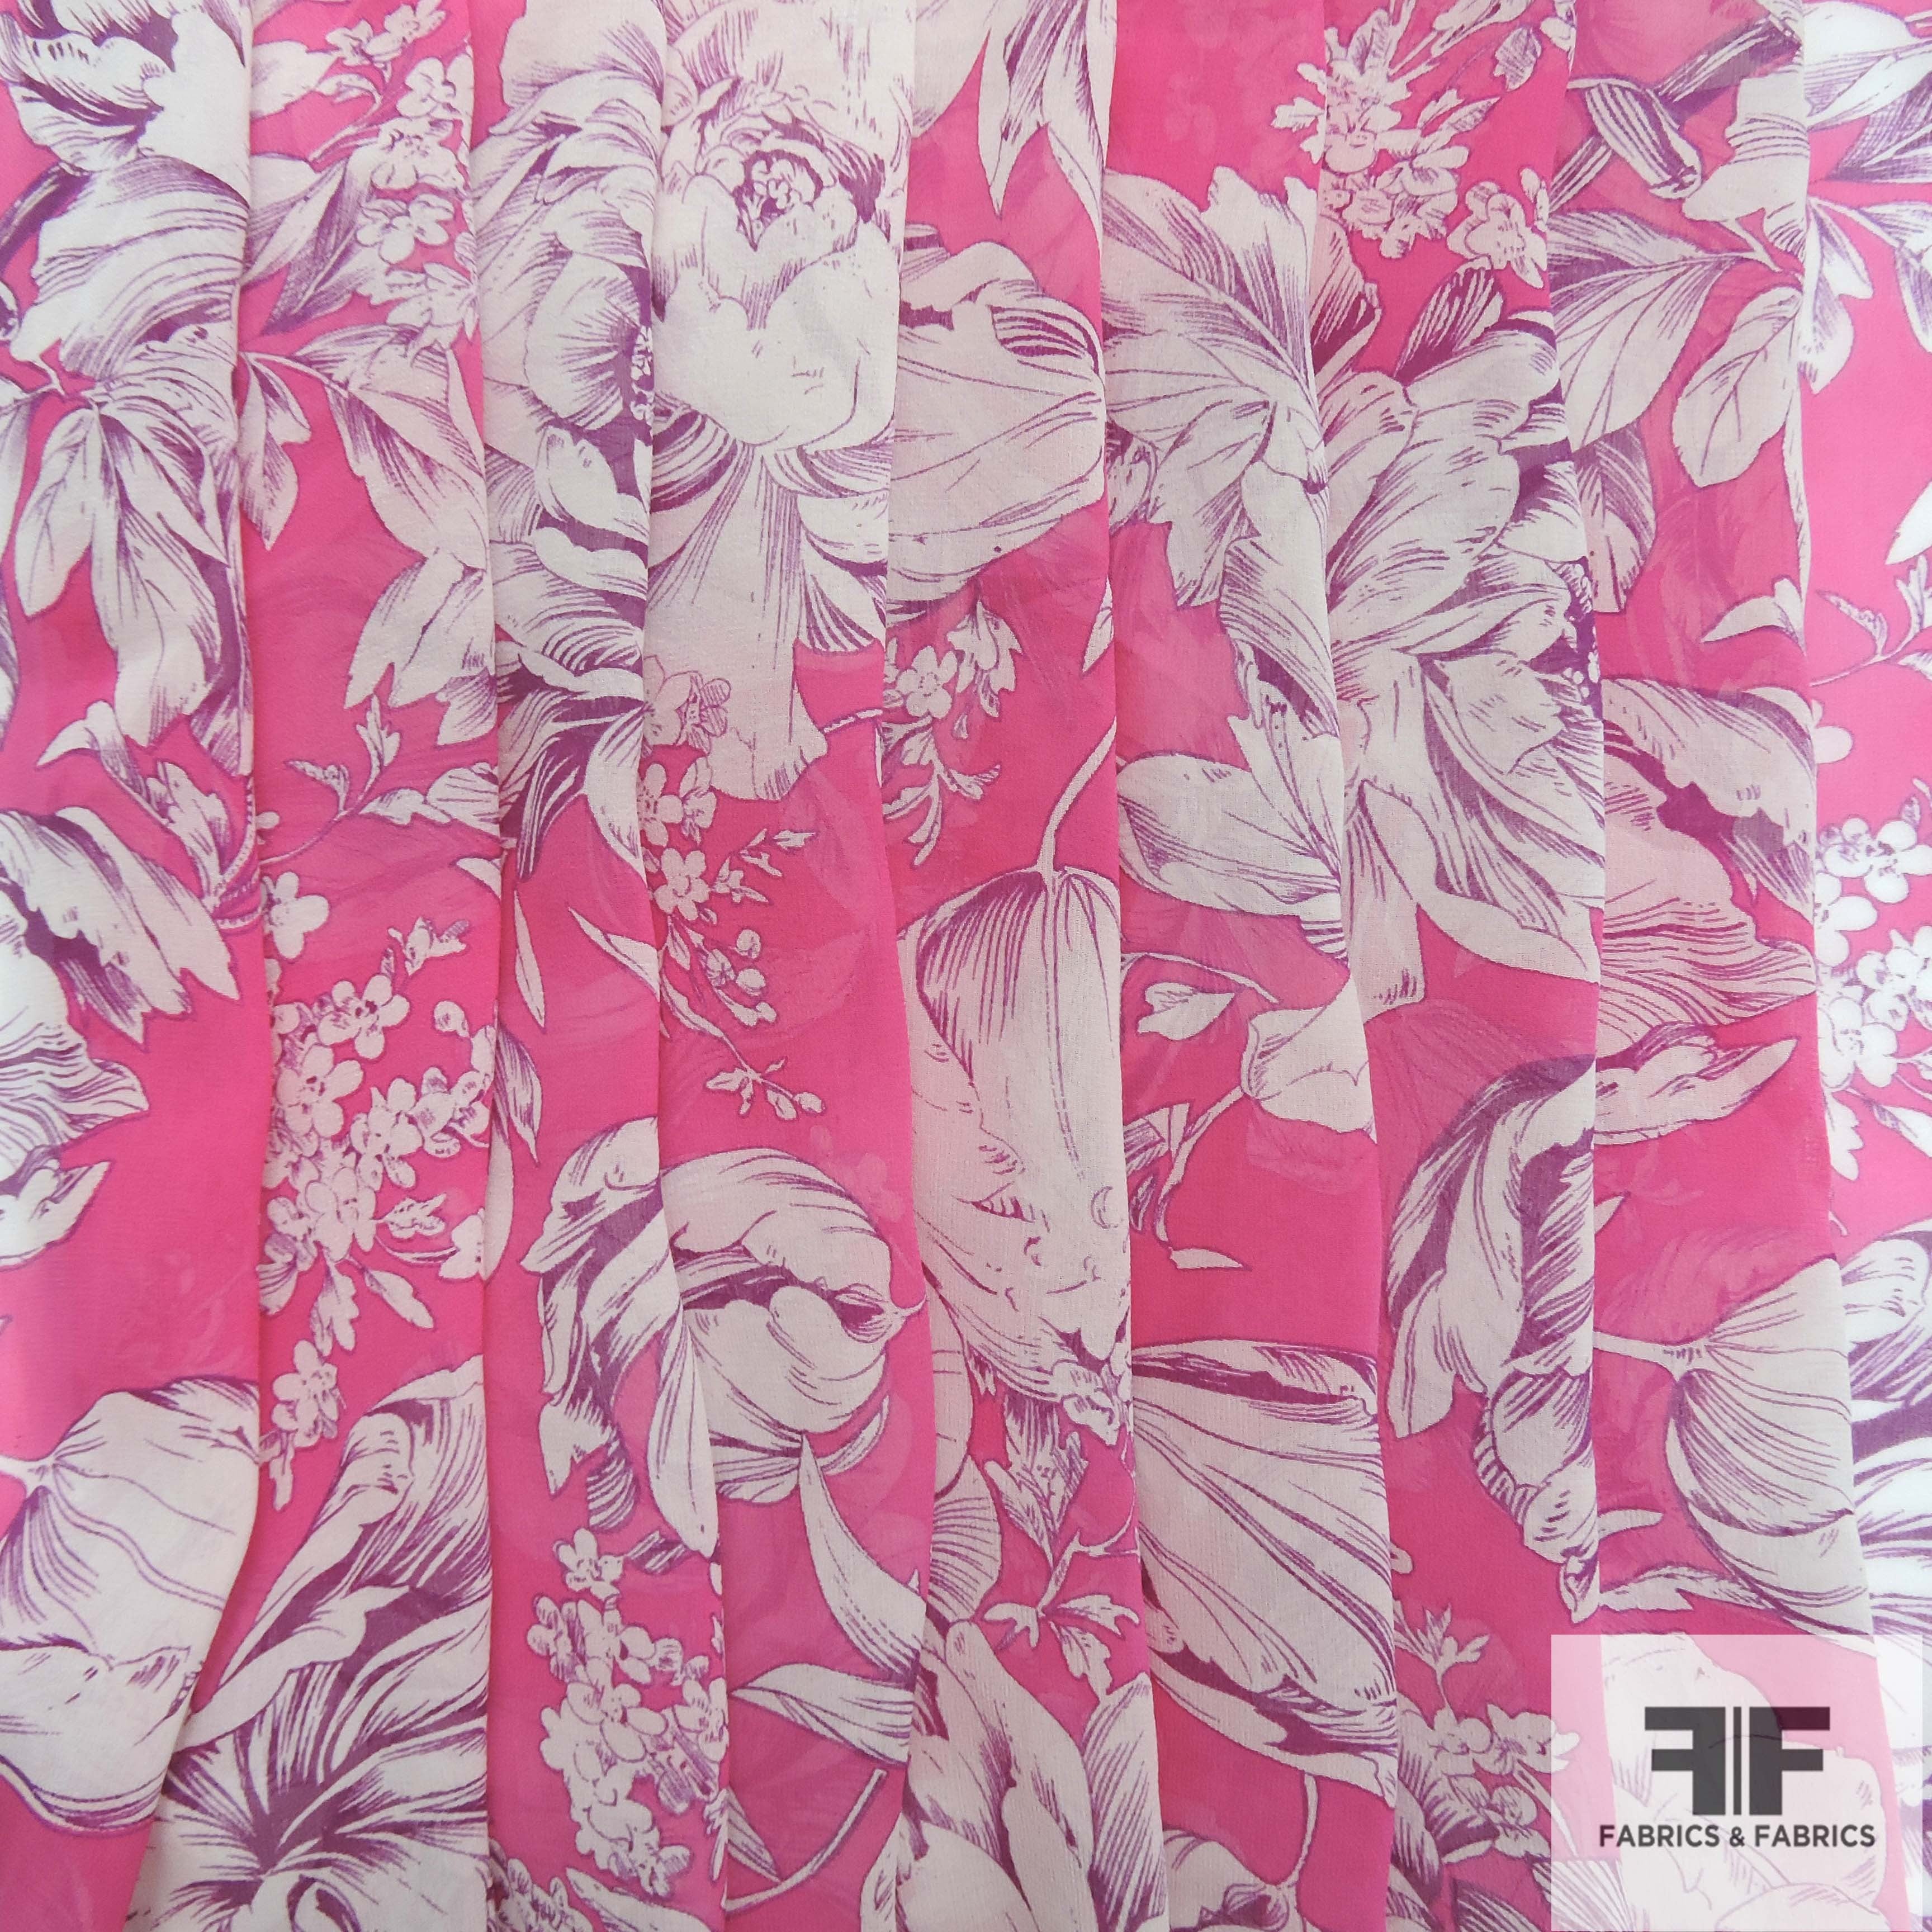 Floral Printed Silk Chiffon - White/Pink